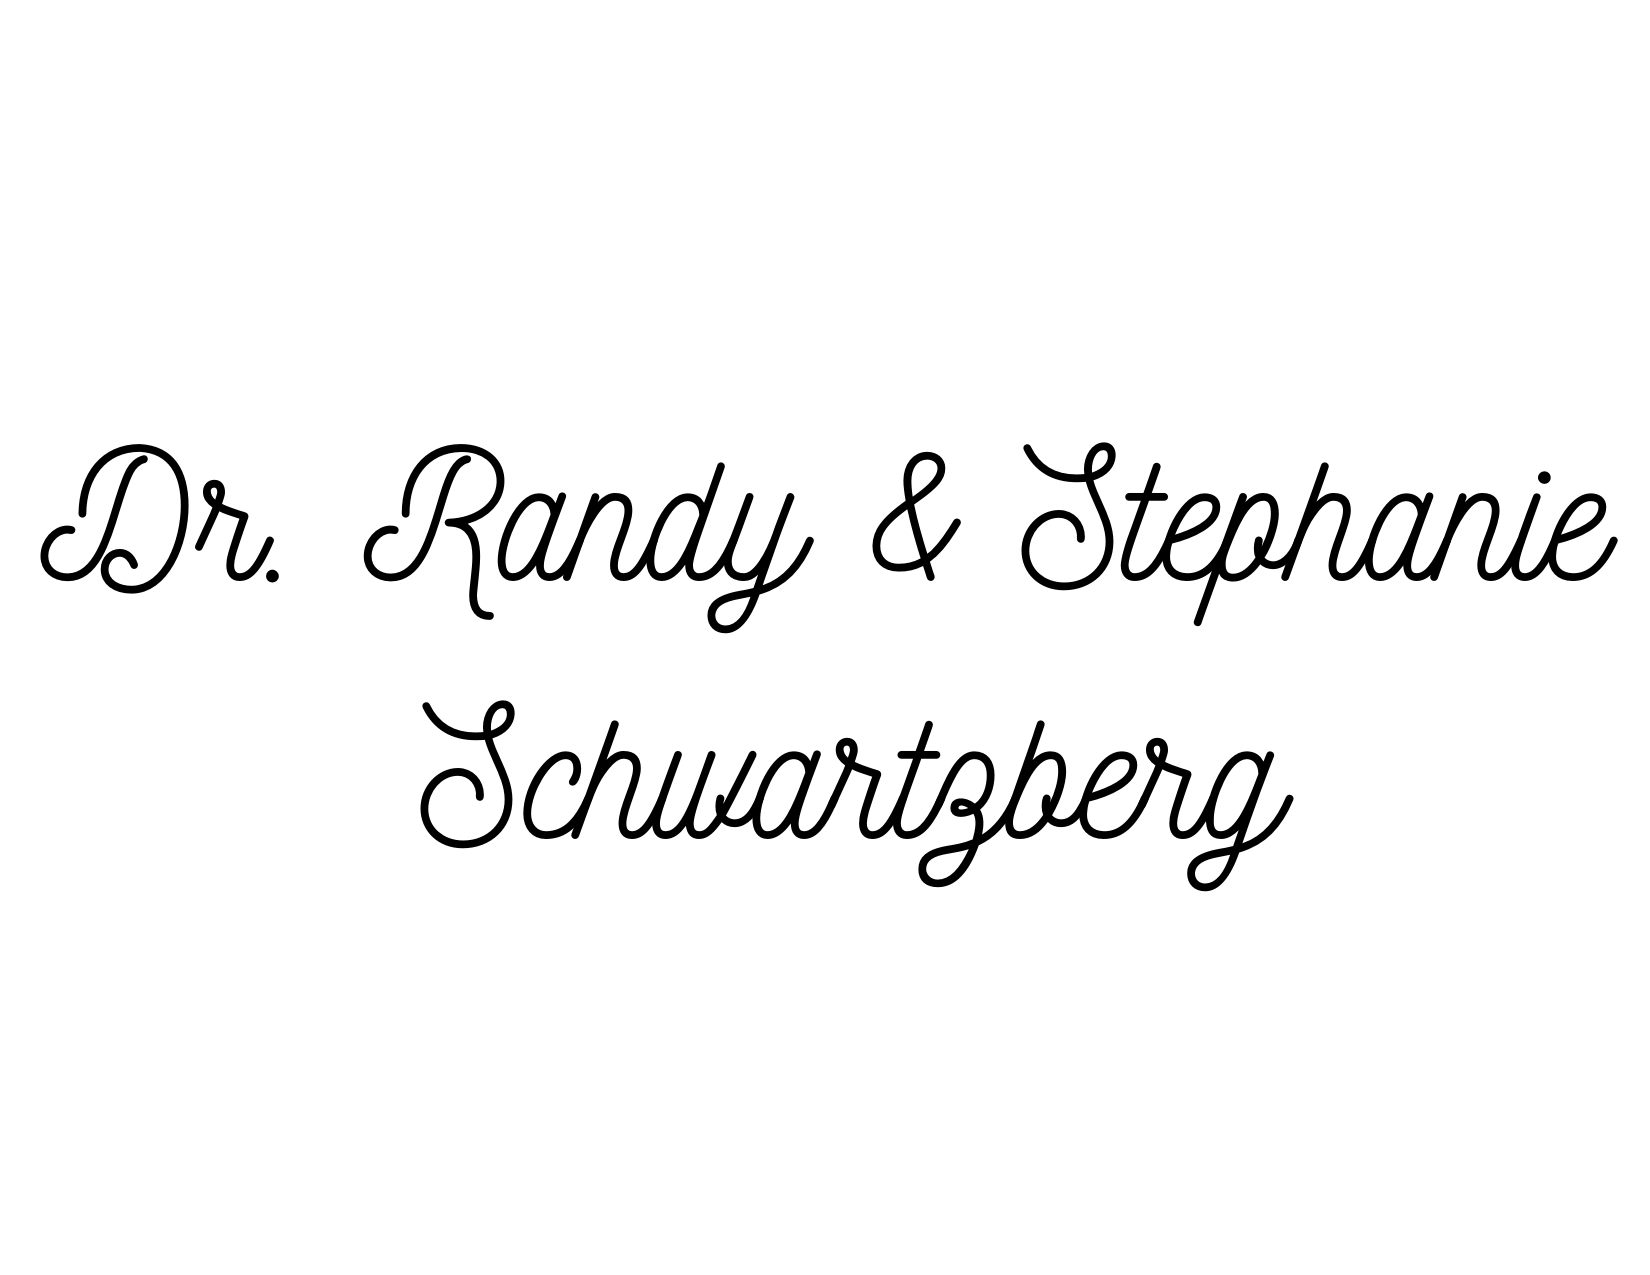 Dr. Randy & Stephanie Schwartzberg